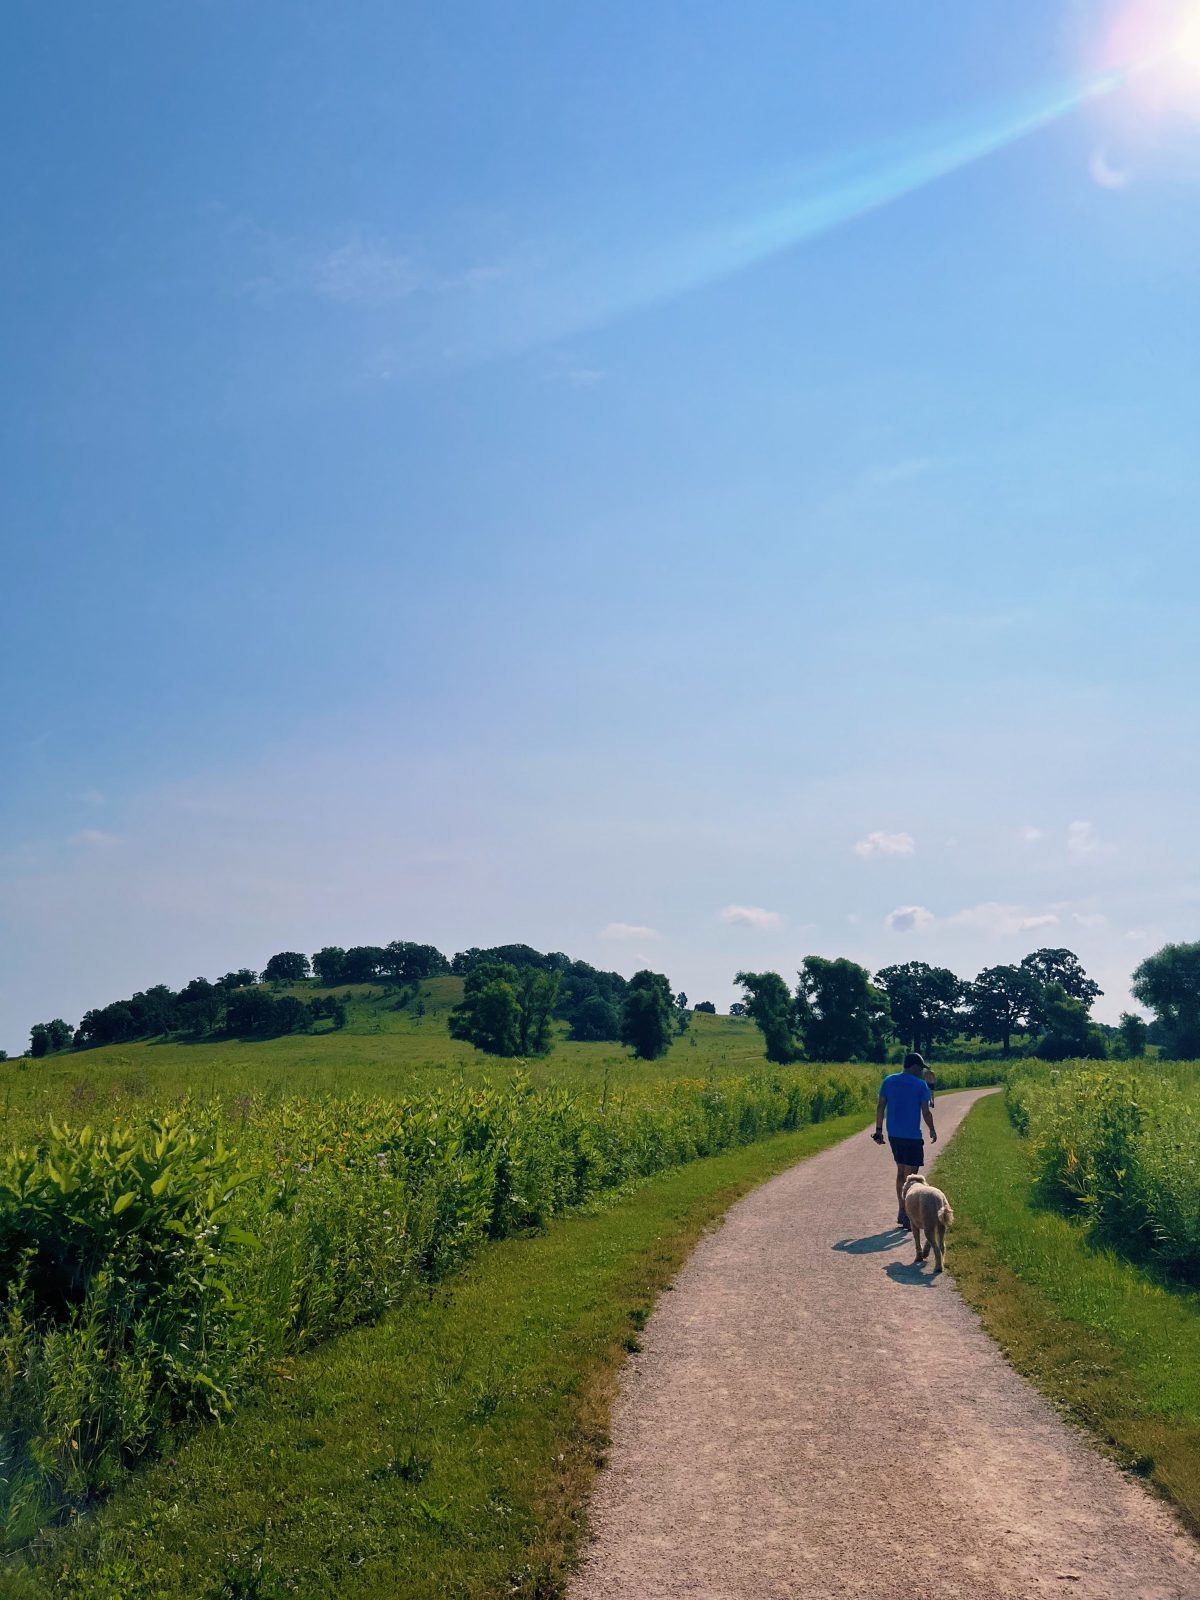 A man walking his dog down a path in a field.